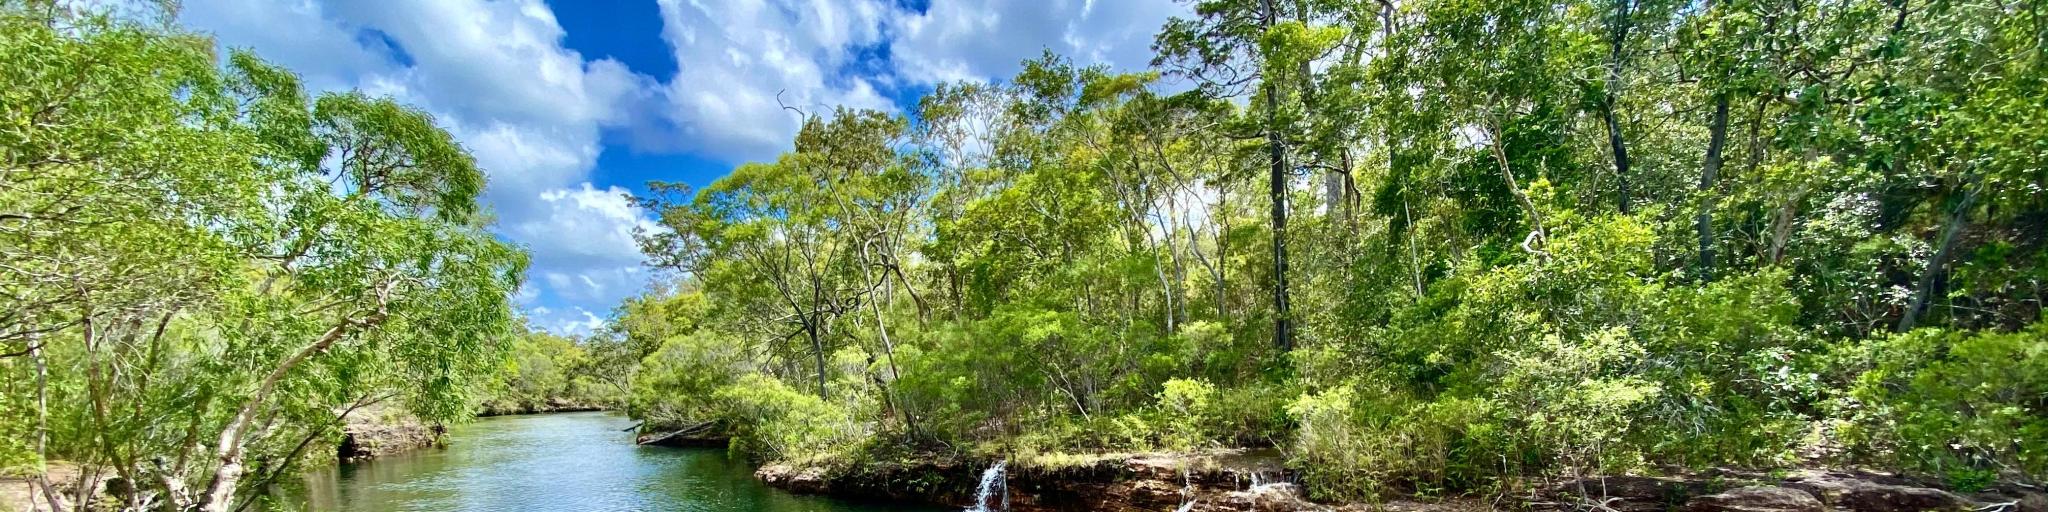 The Saucepan, a shallow creek in the lush vegetation of, Cape York, Australia